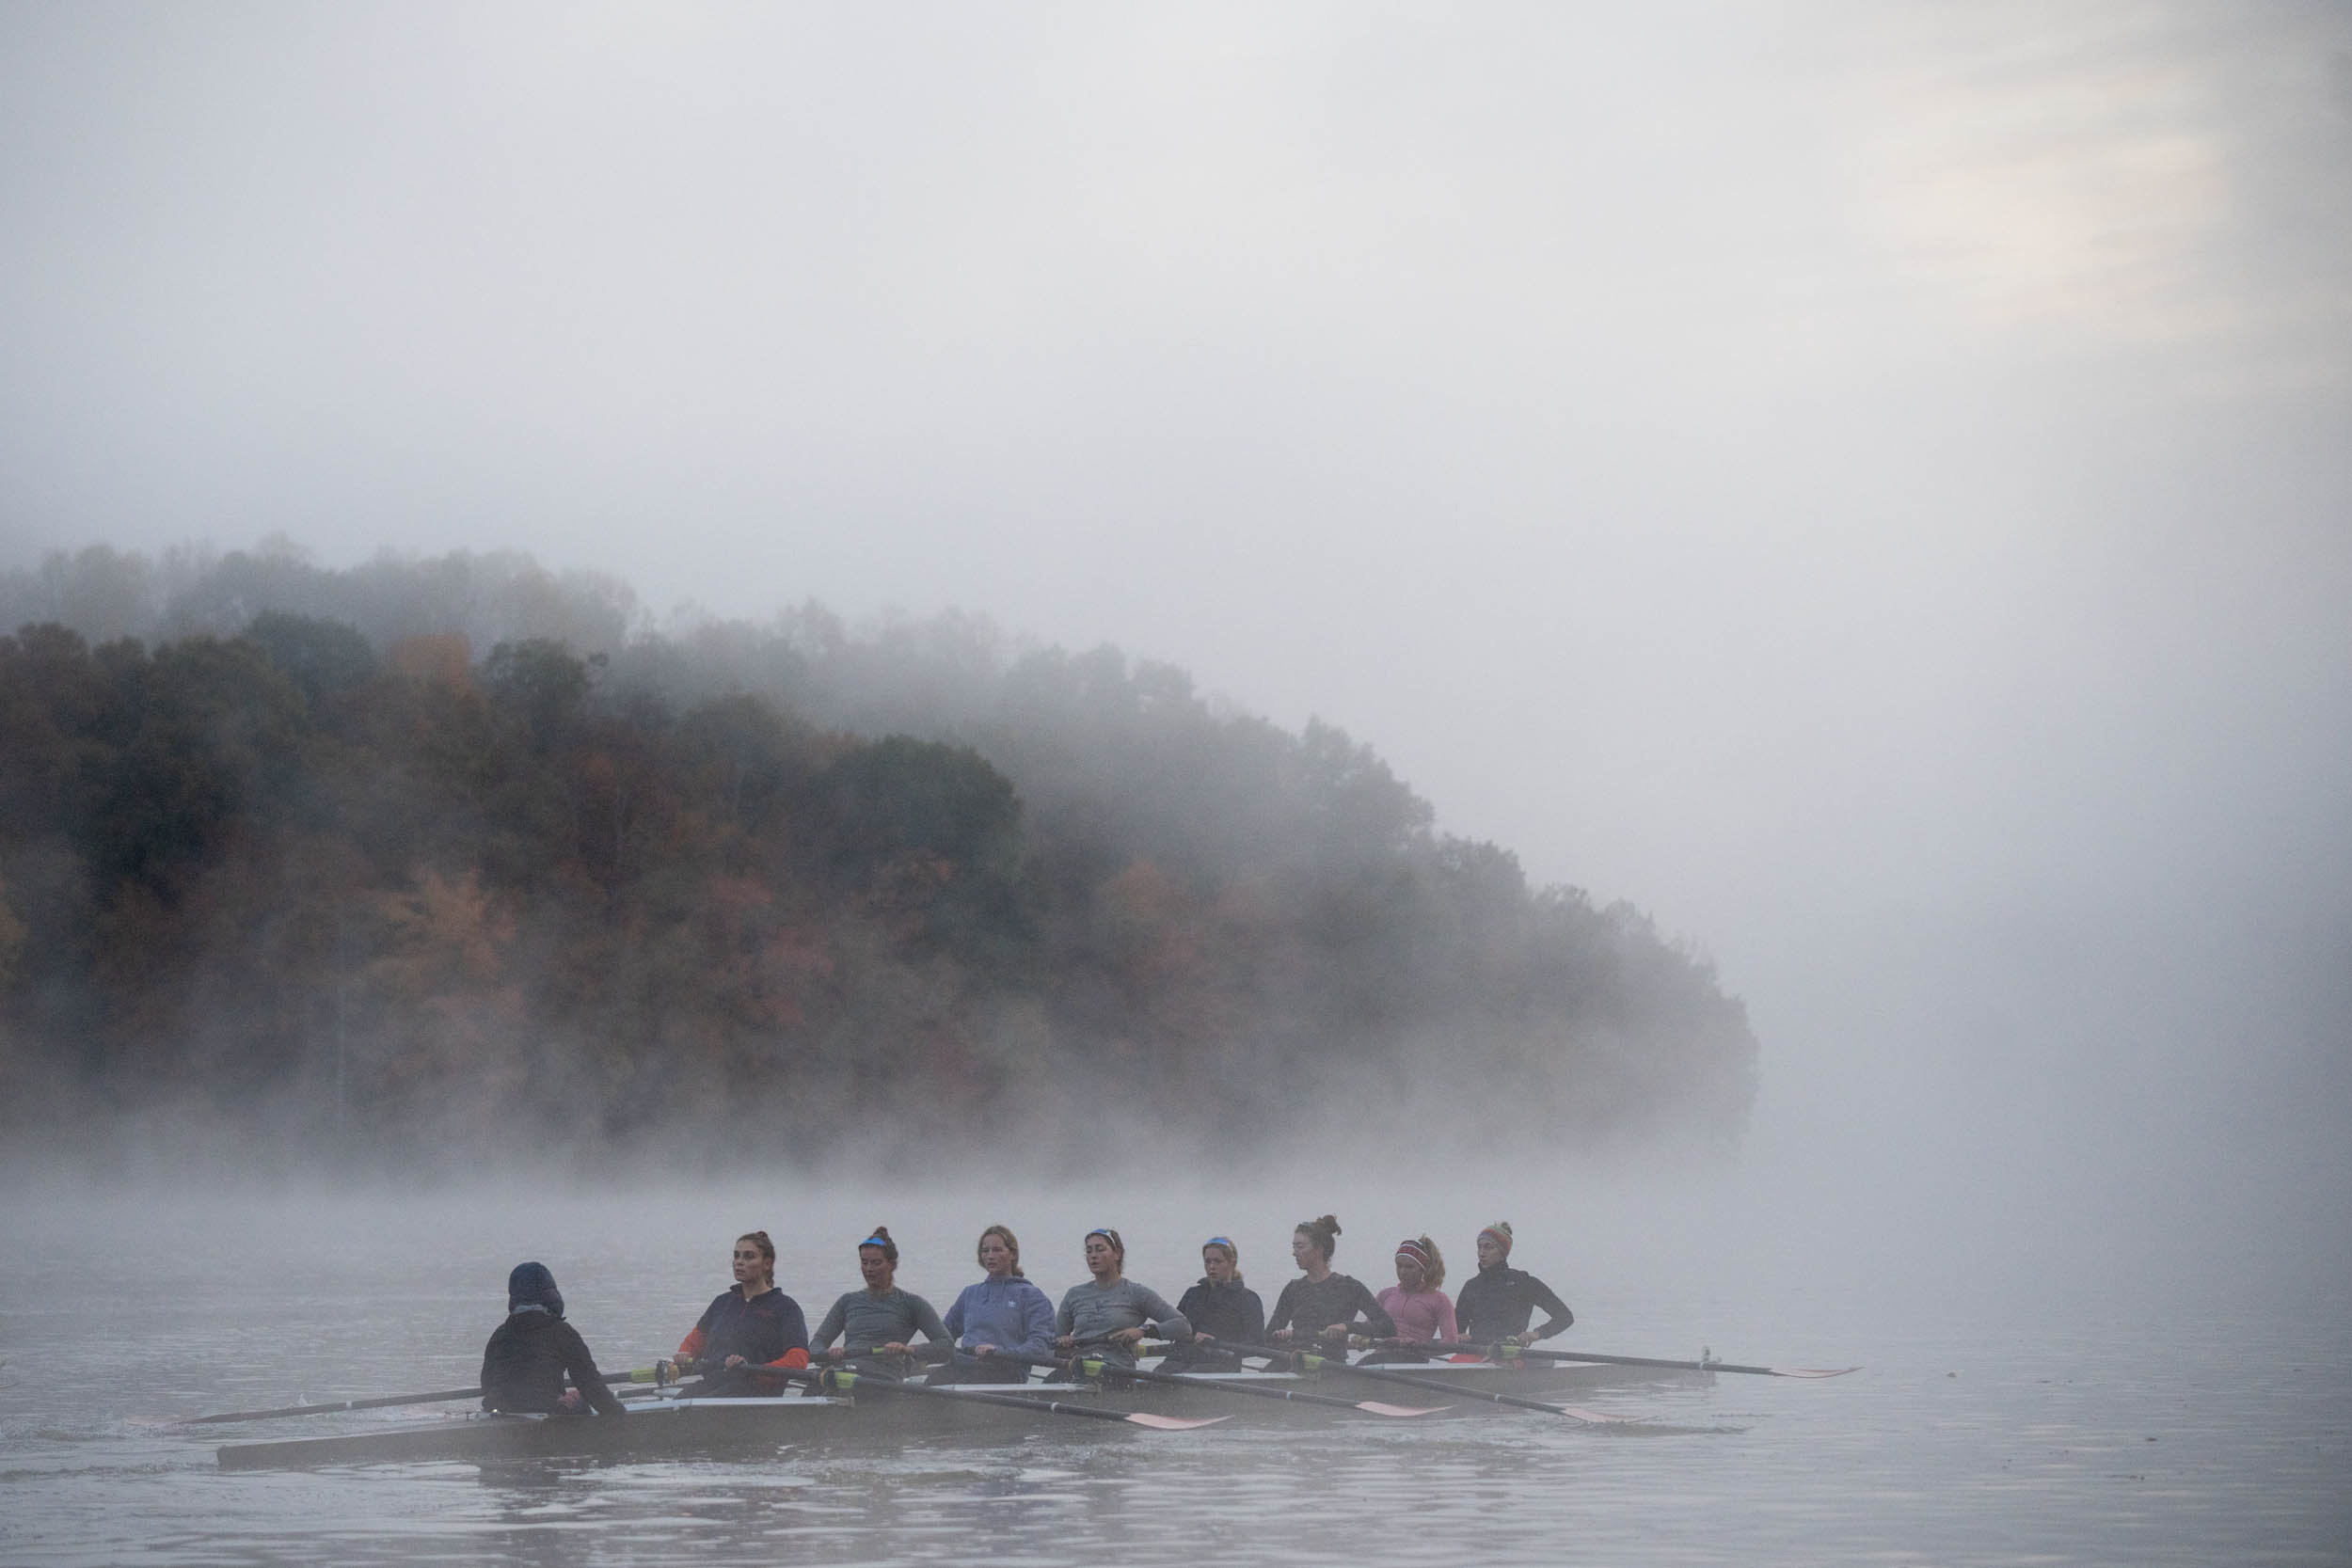 UVA womens rowing team on a foggy river